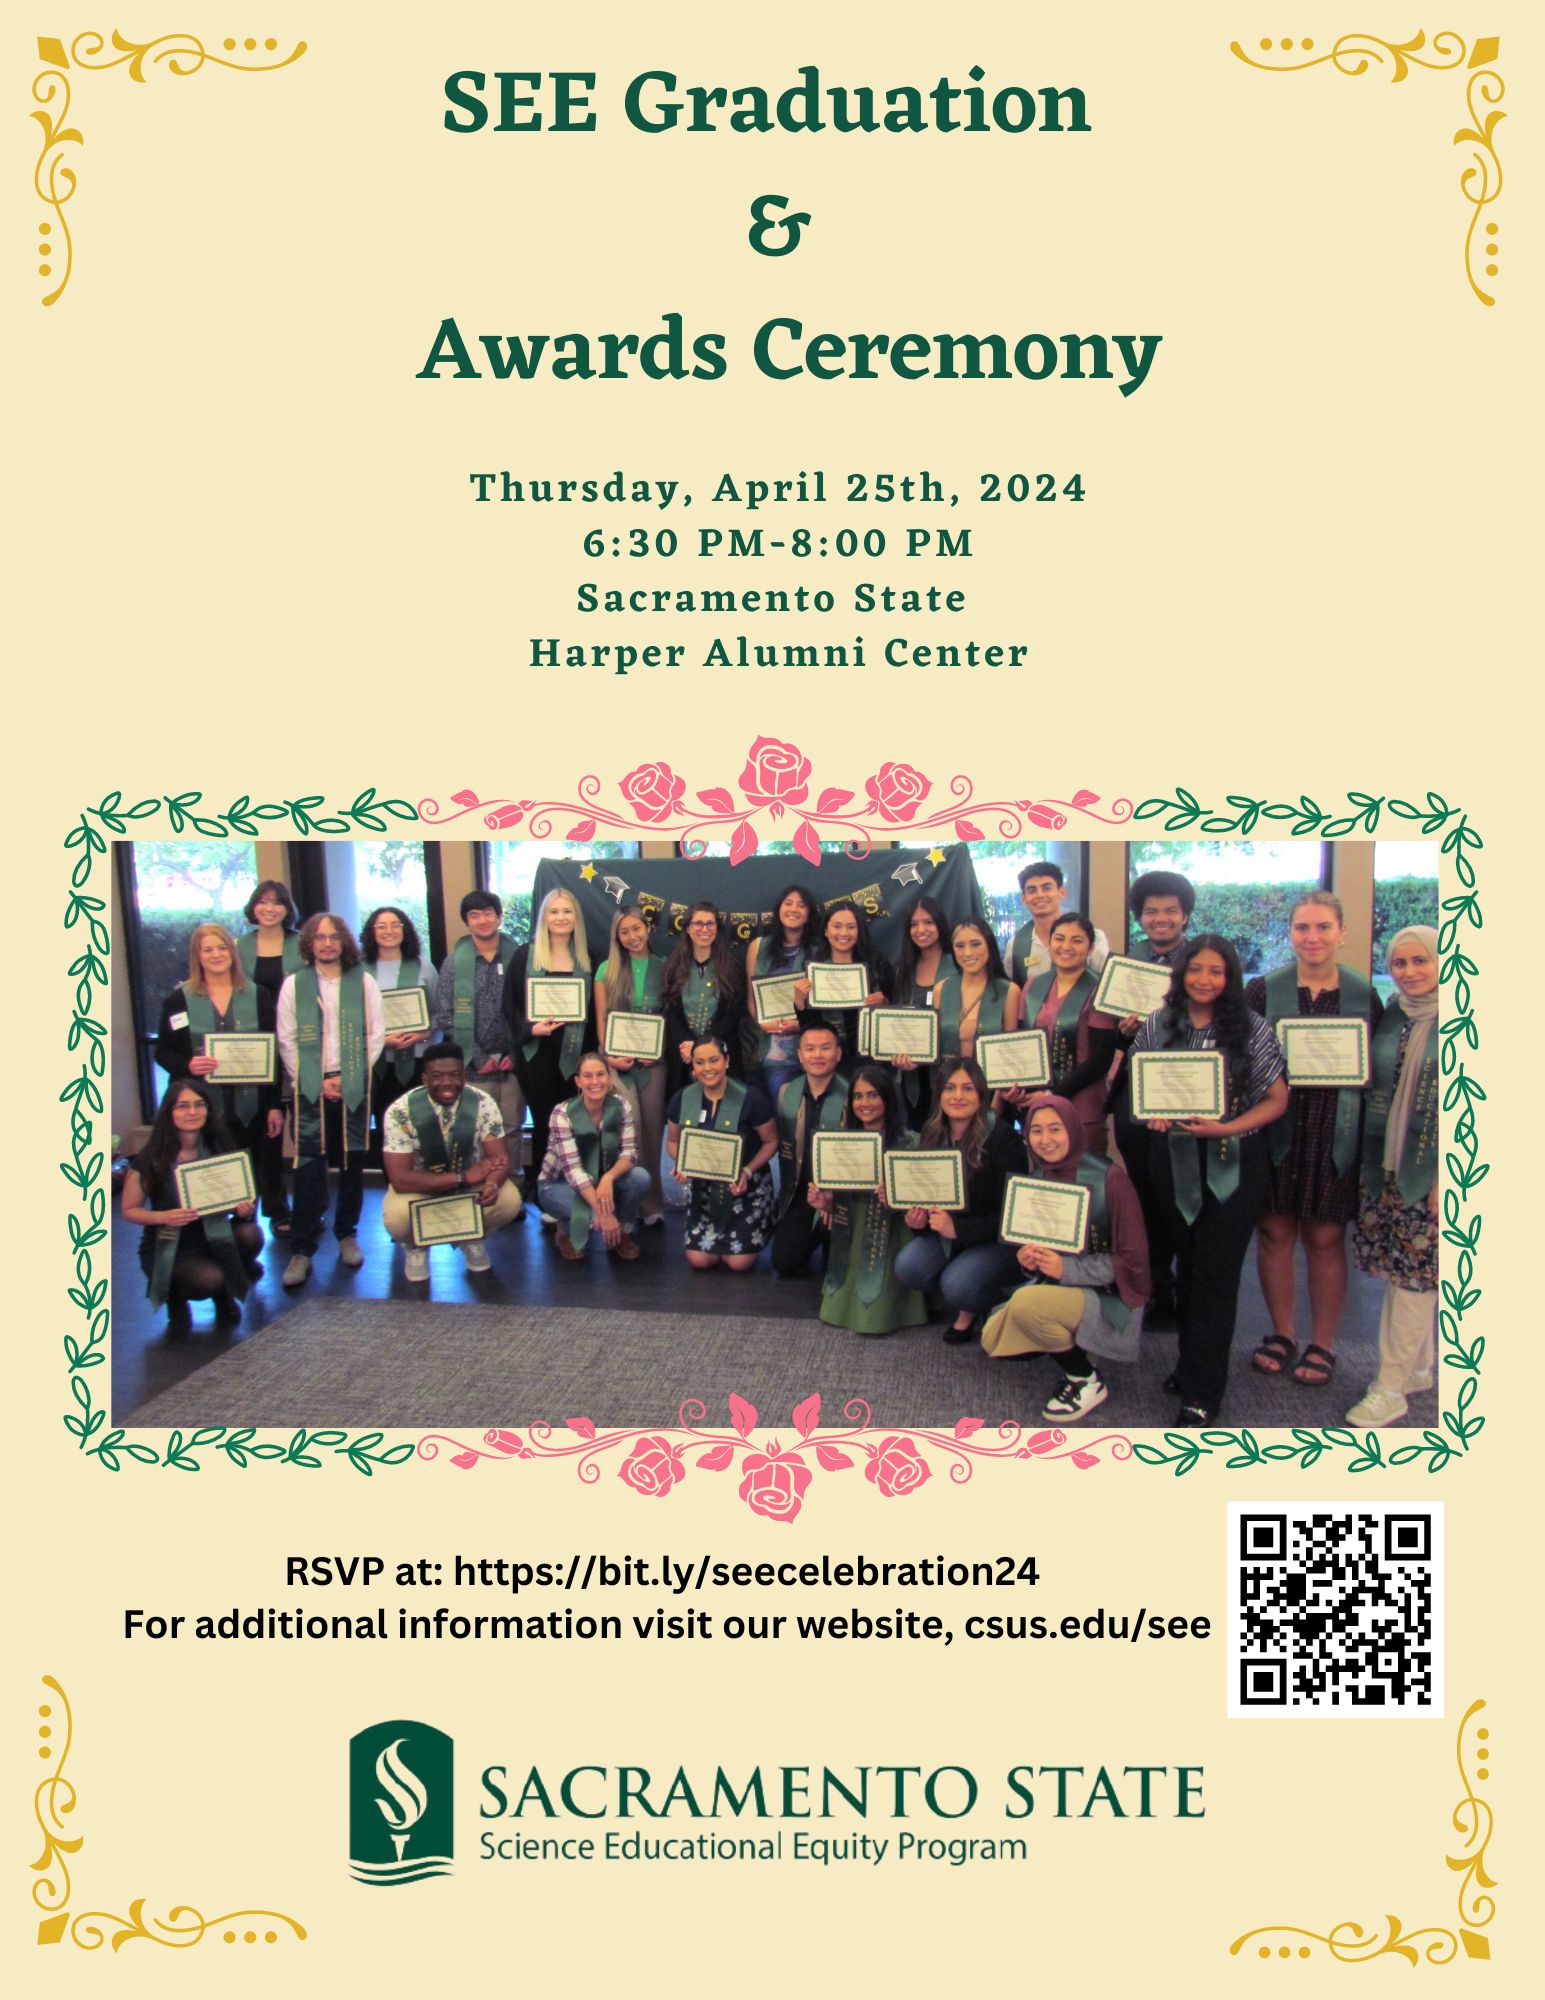 flier-see-graduation-and-awards-ceremony.jpg